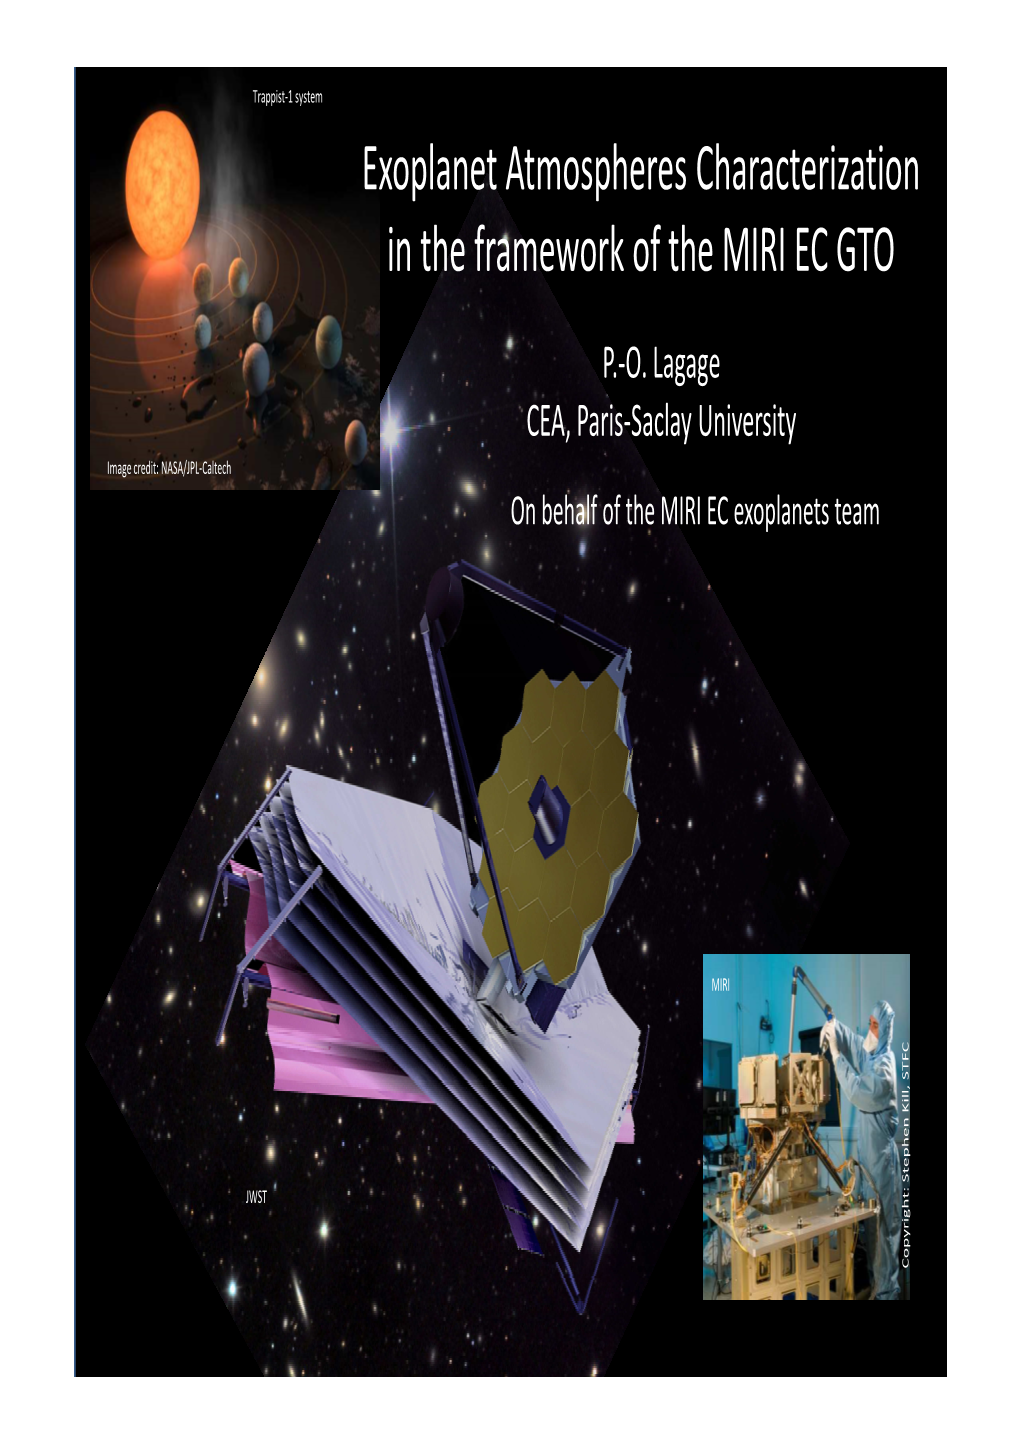 Exoplanet Atmospheres Characterization in the Framework of the MIRI EC GTO